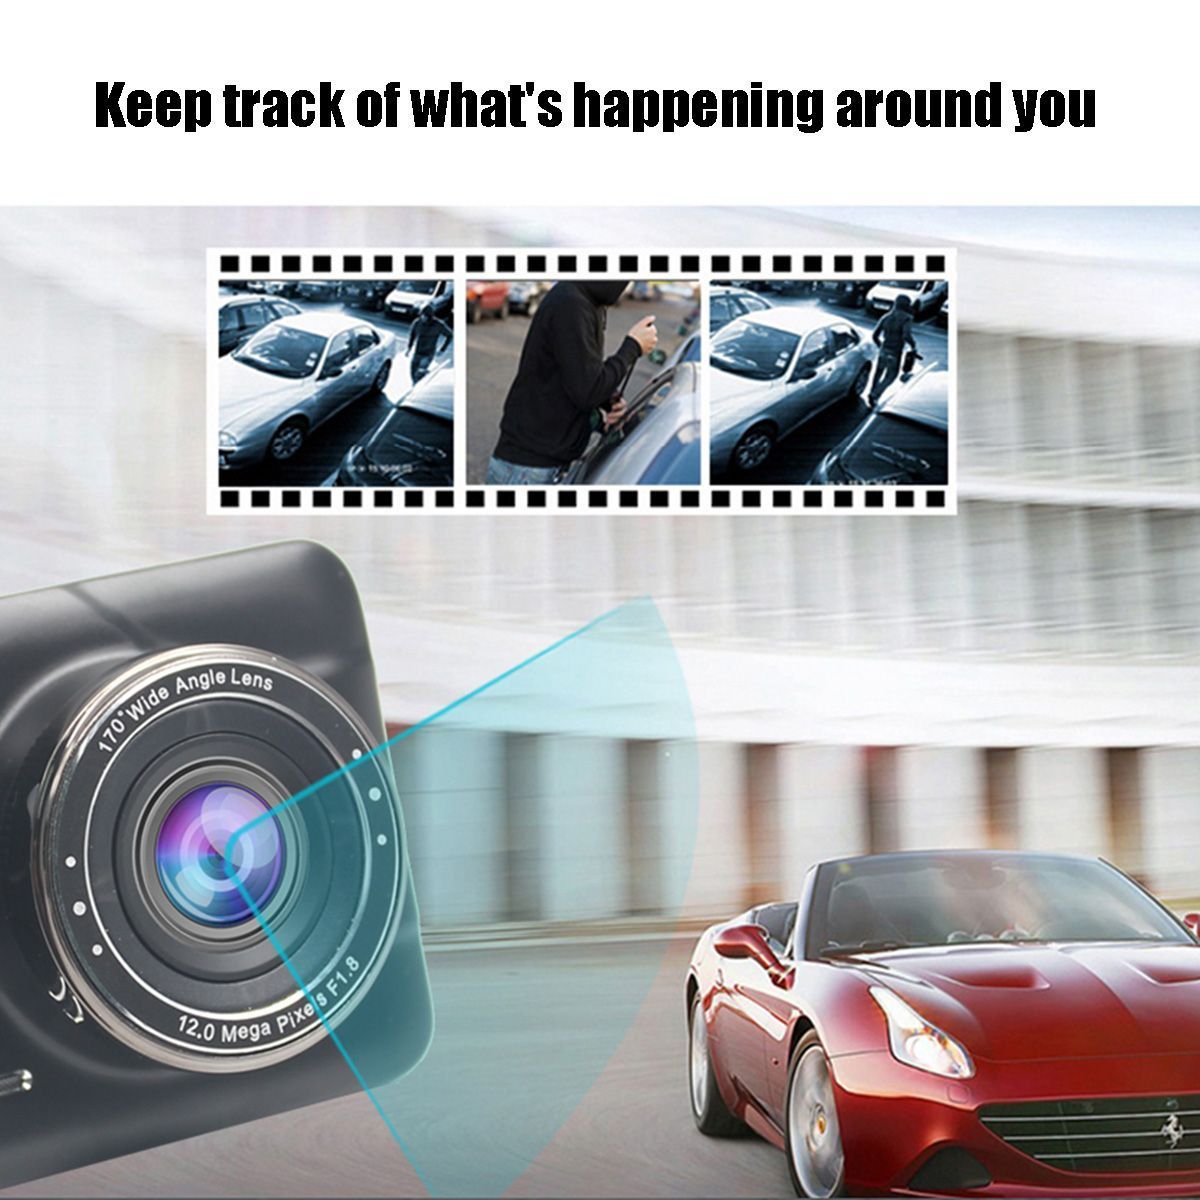 Mini-Car-DVR-Camera-Dashcam-Full-1080-HD-Video-Registrator-Recorder-G-sensor-1528304